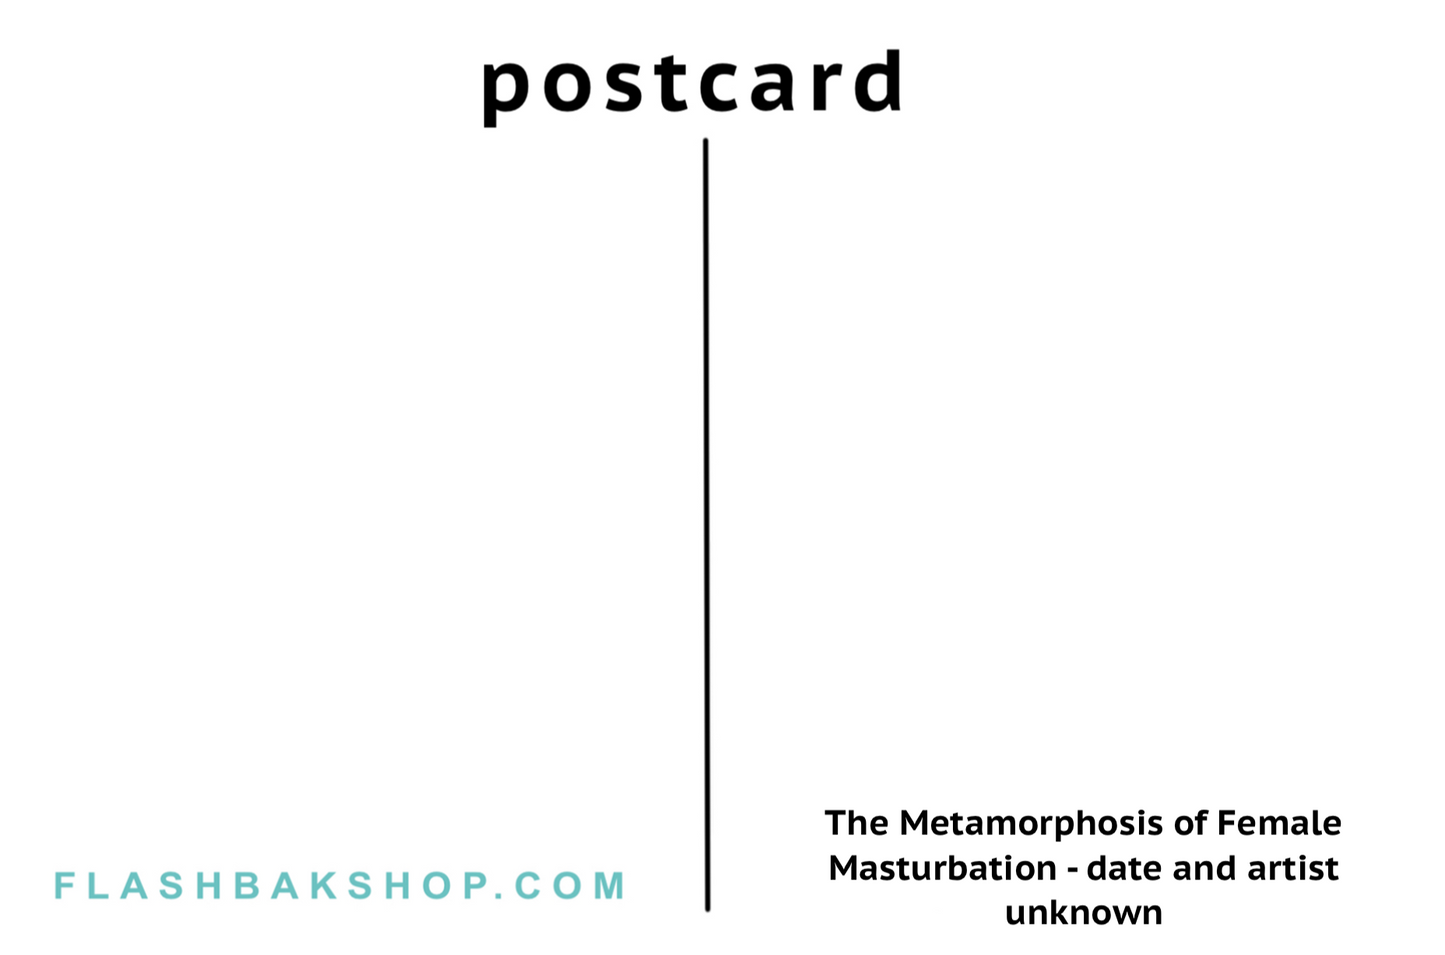 The Metamorphosis of Female Masturbation, date and artist unknown - Postcard